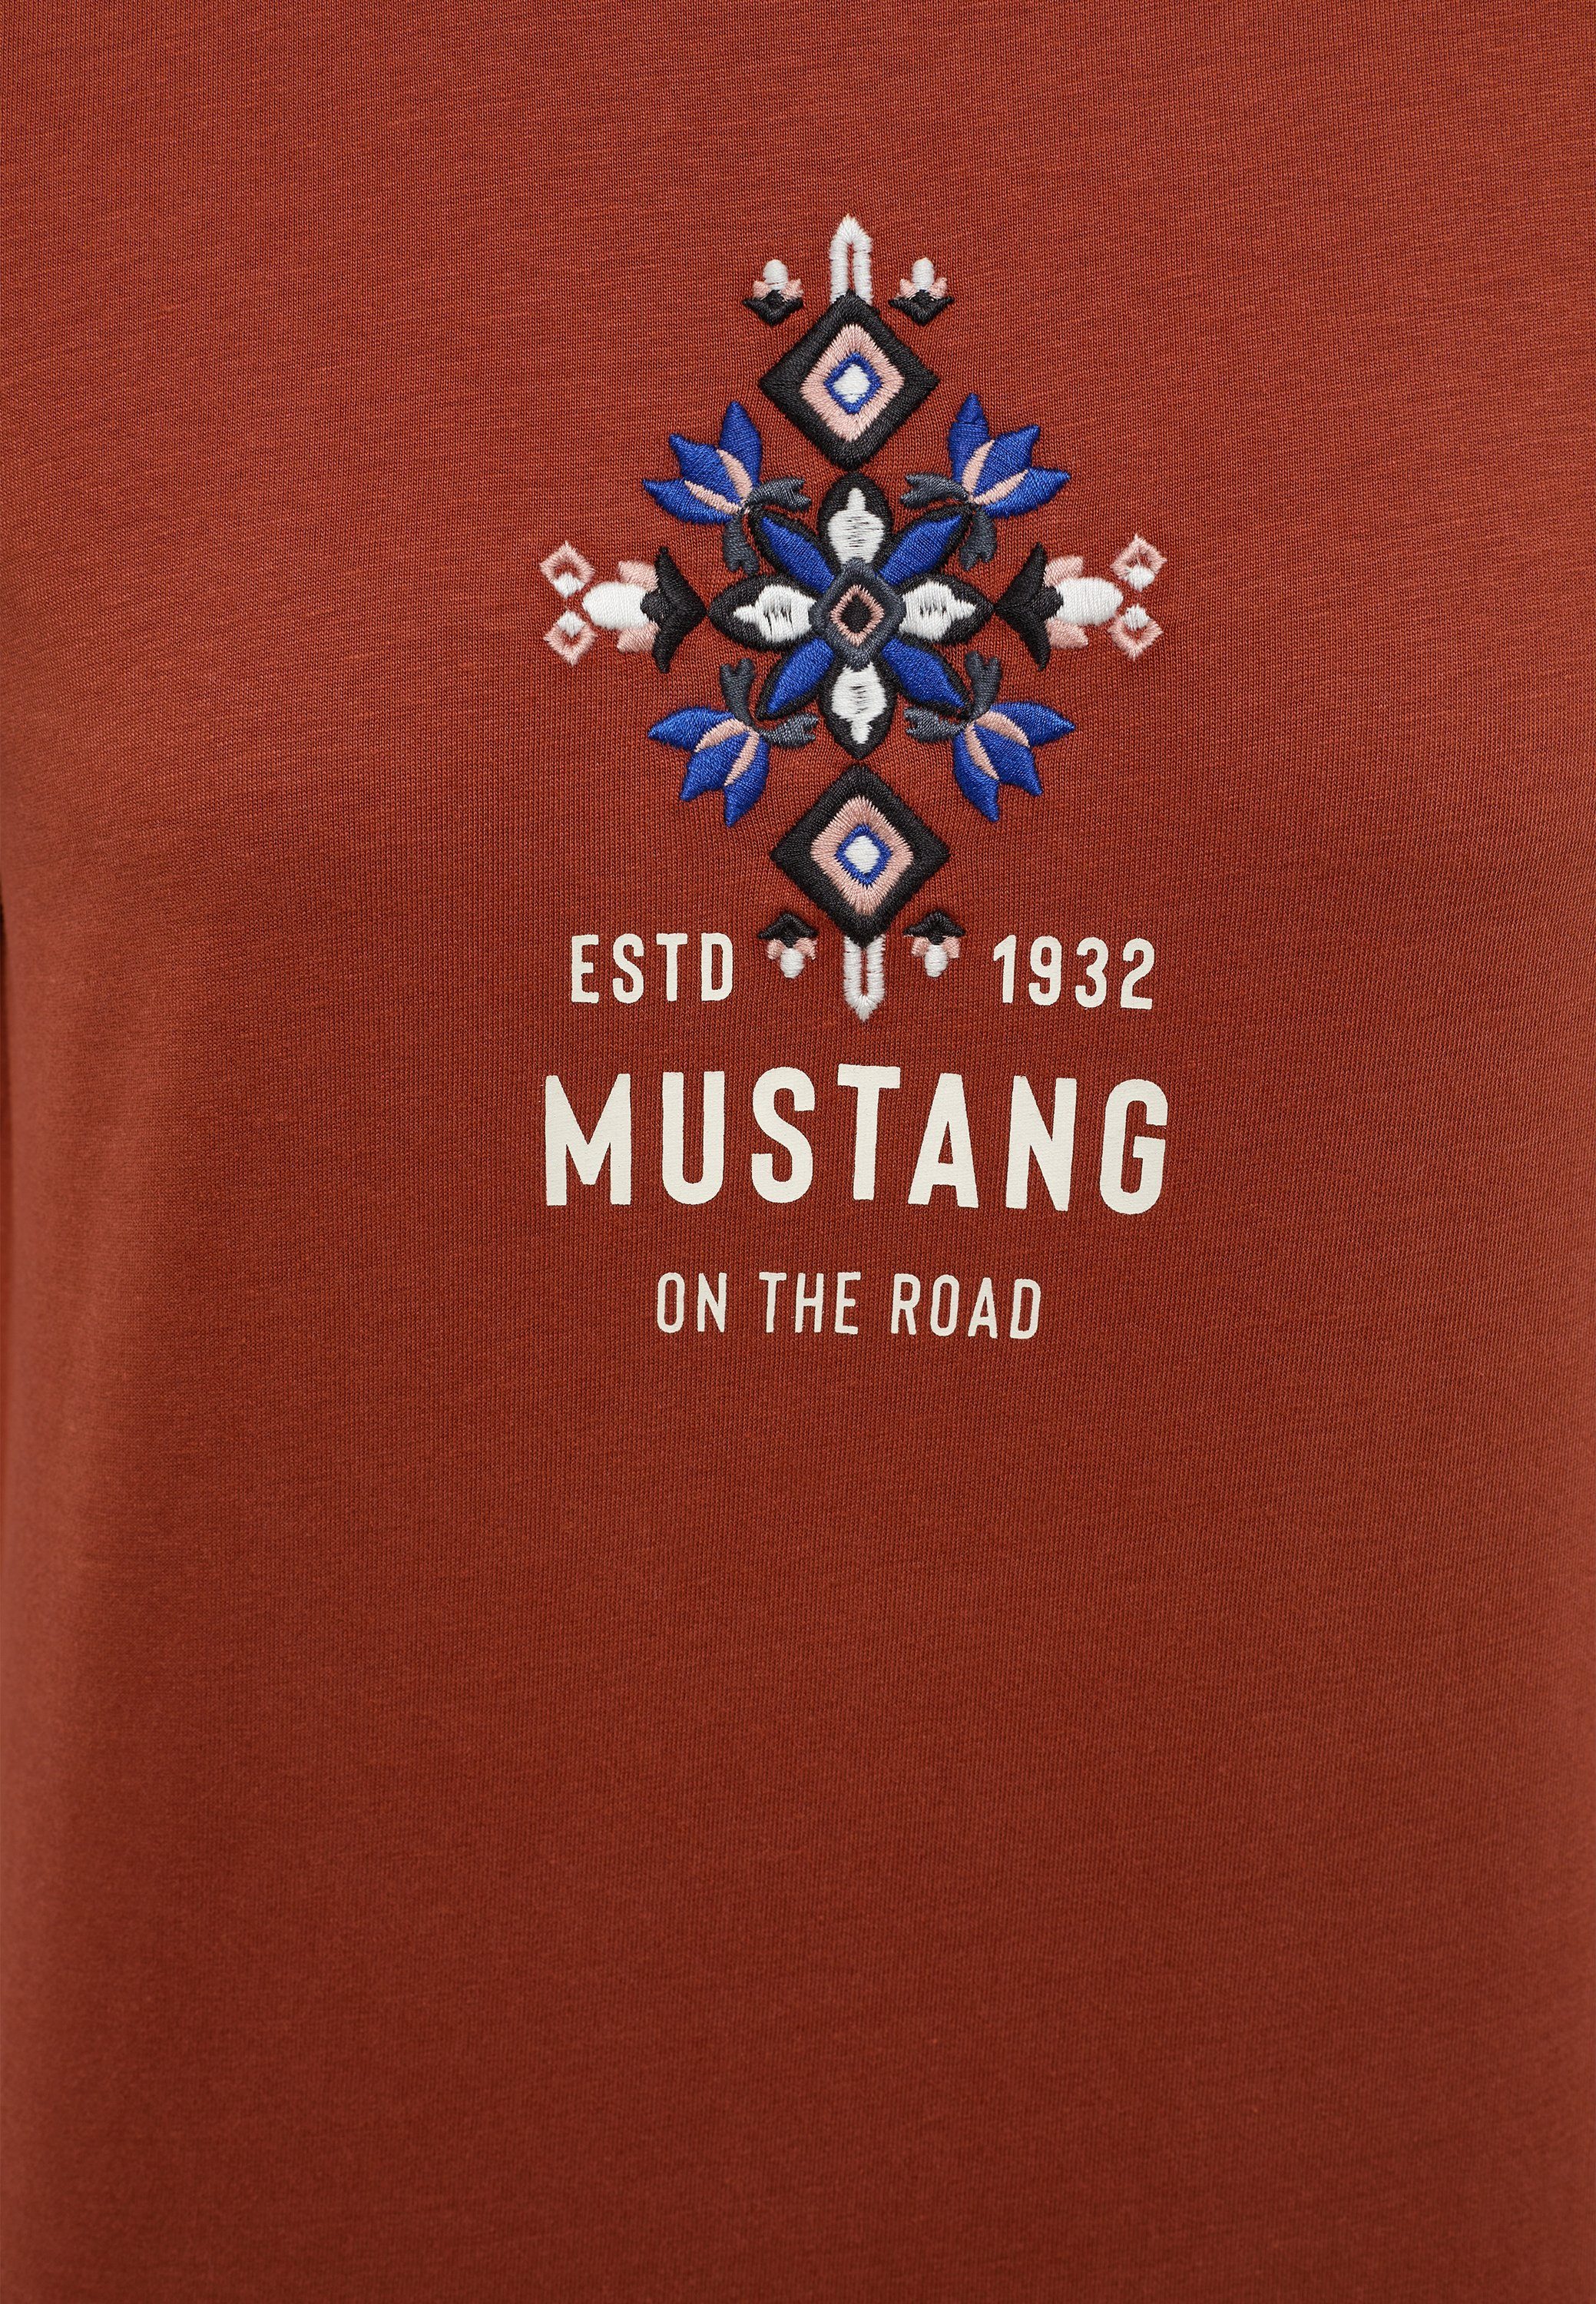 Mustang T-Shirt Print-Shirt MUSTANG Kurzarmshirt kaminrot